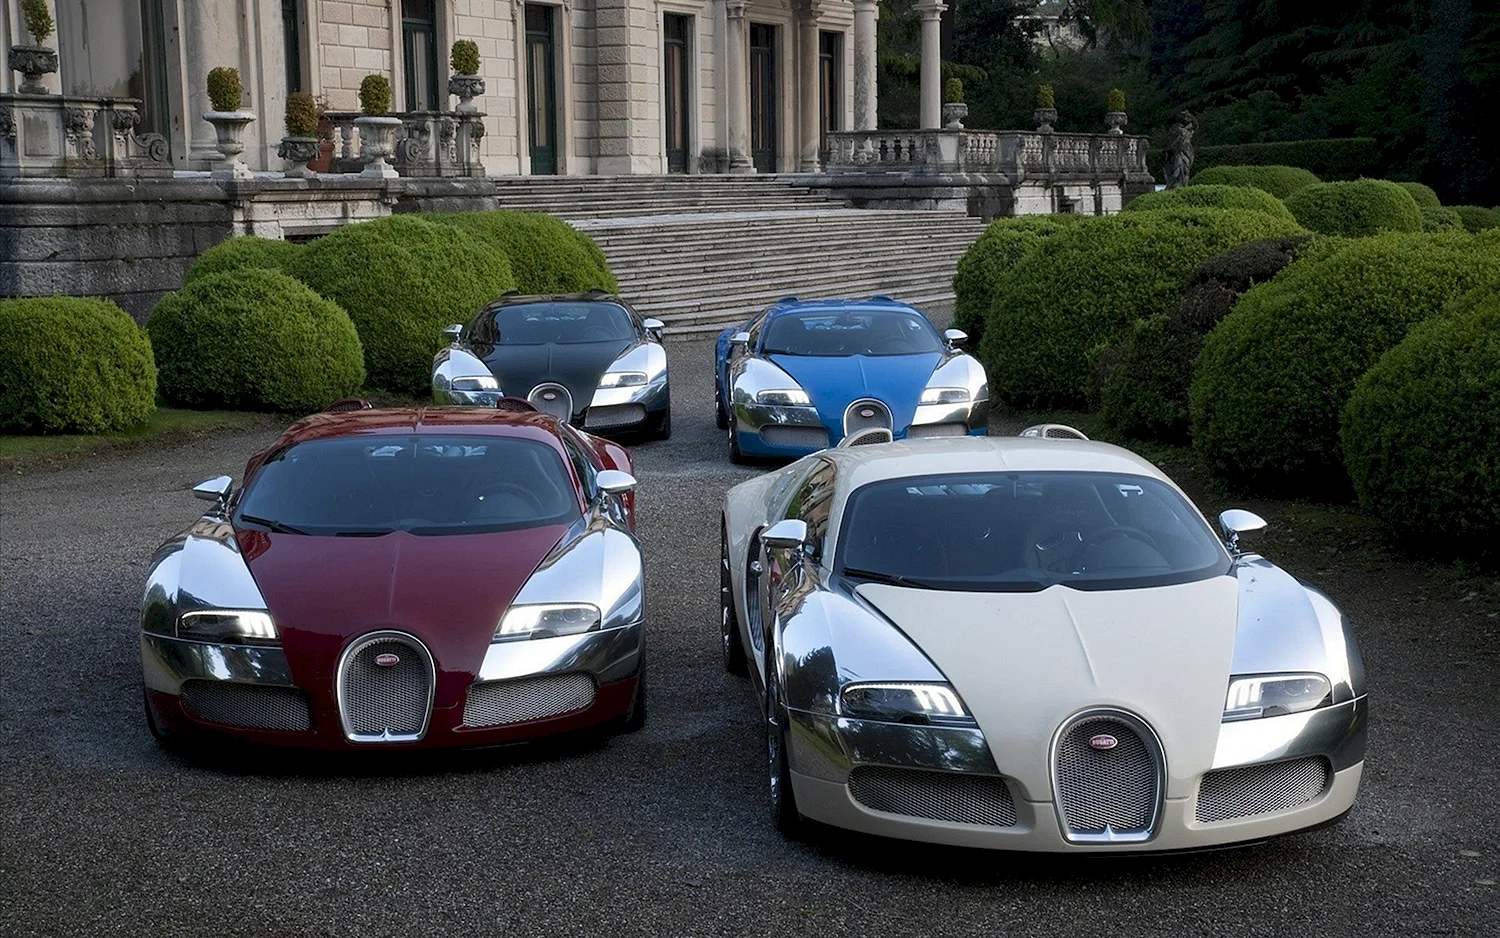 Bugatti 2009 Veyron centenaire